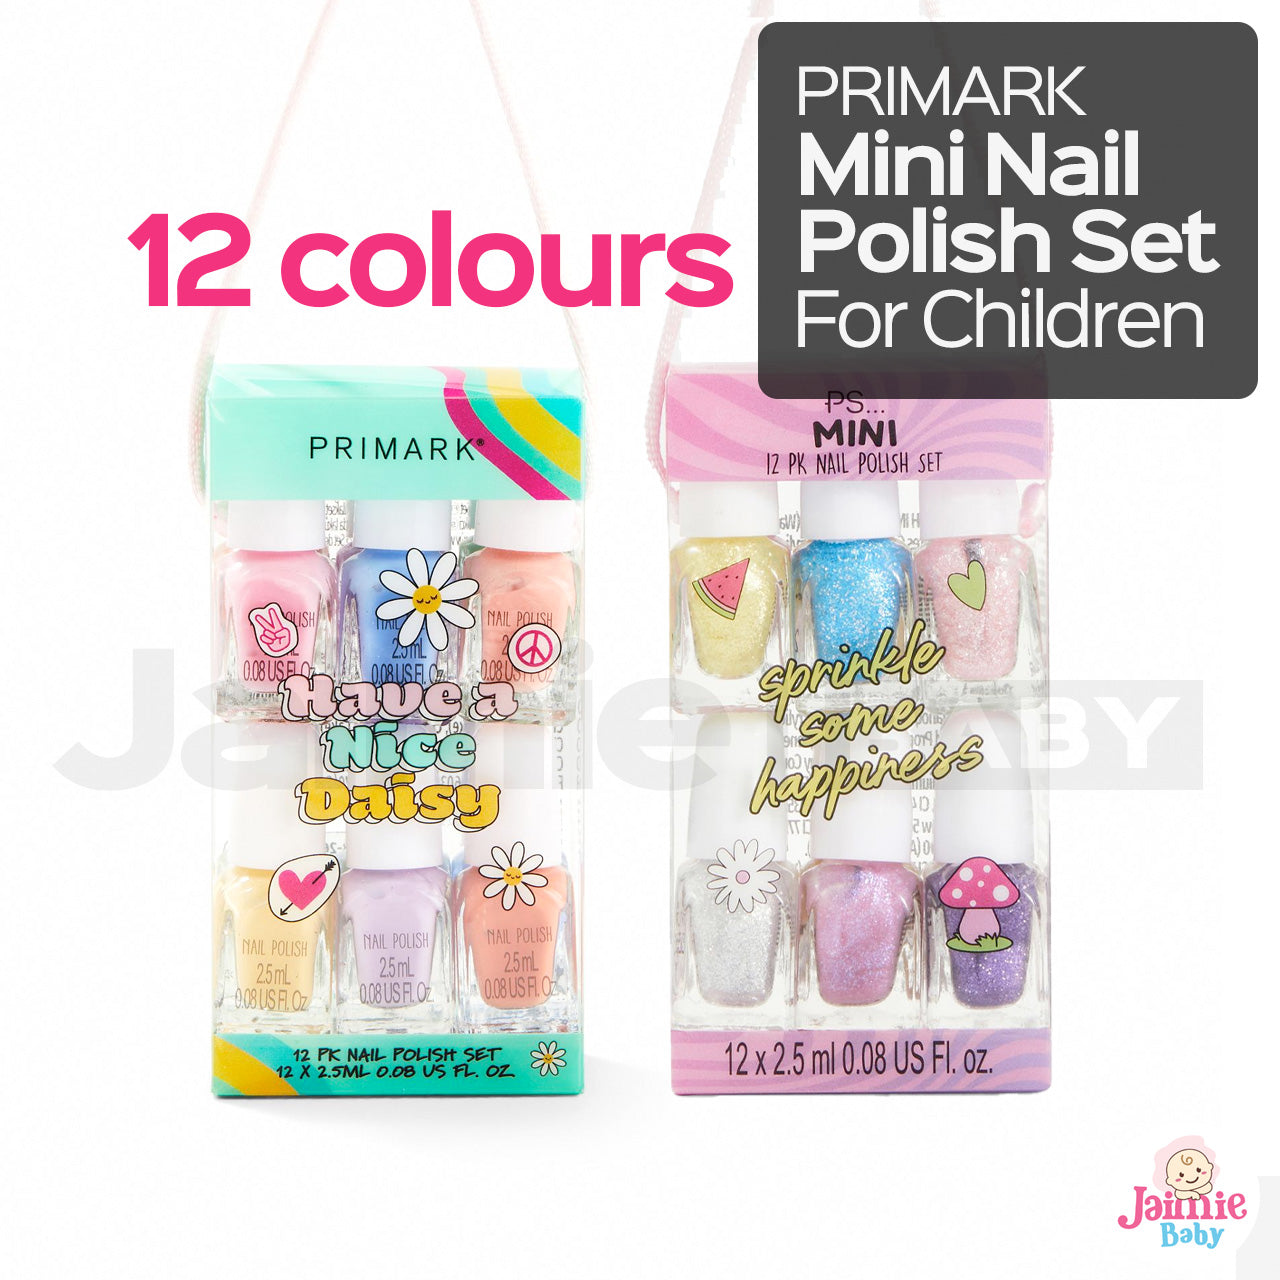 Nail Polish Set for Children 12 pack